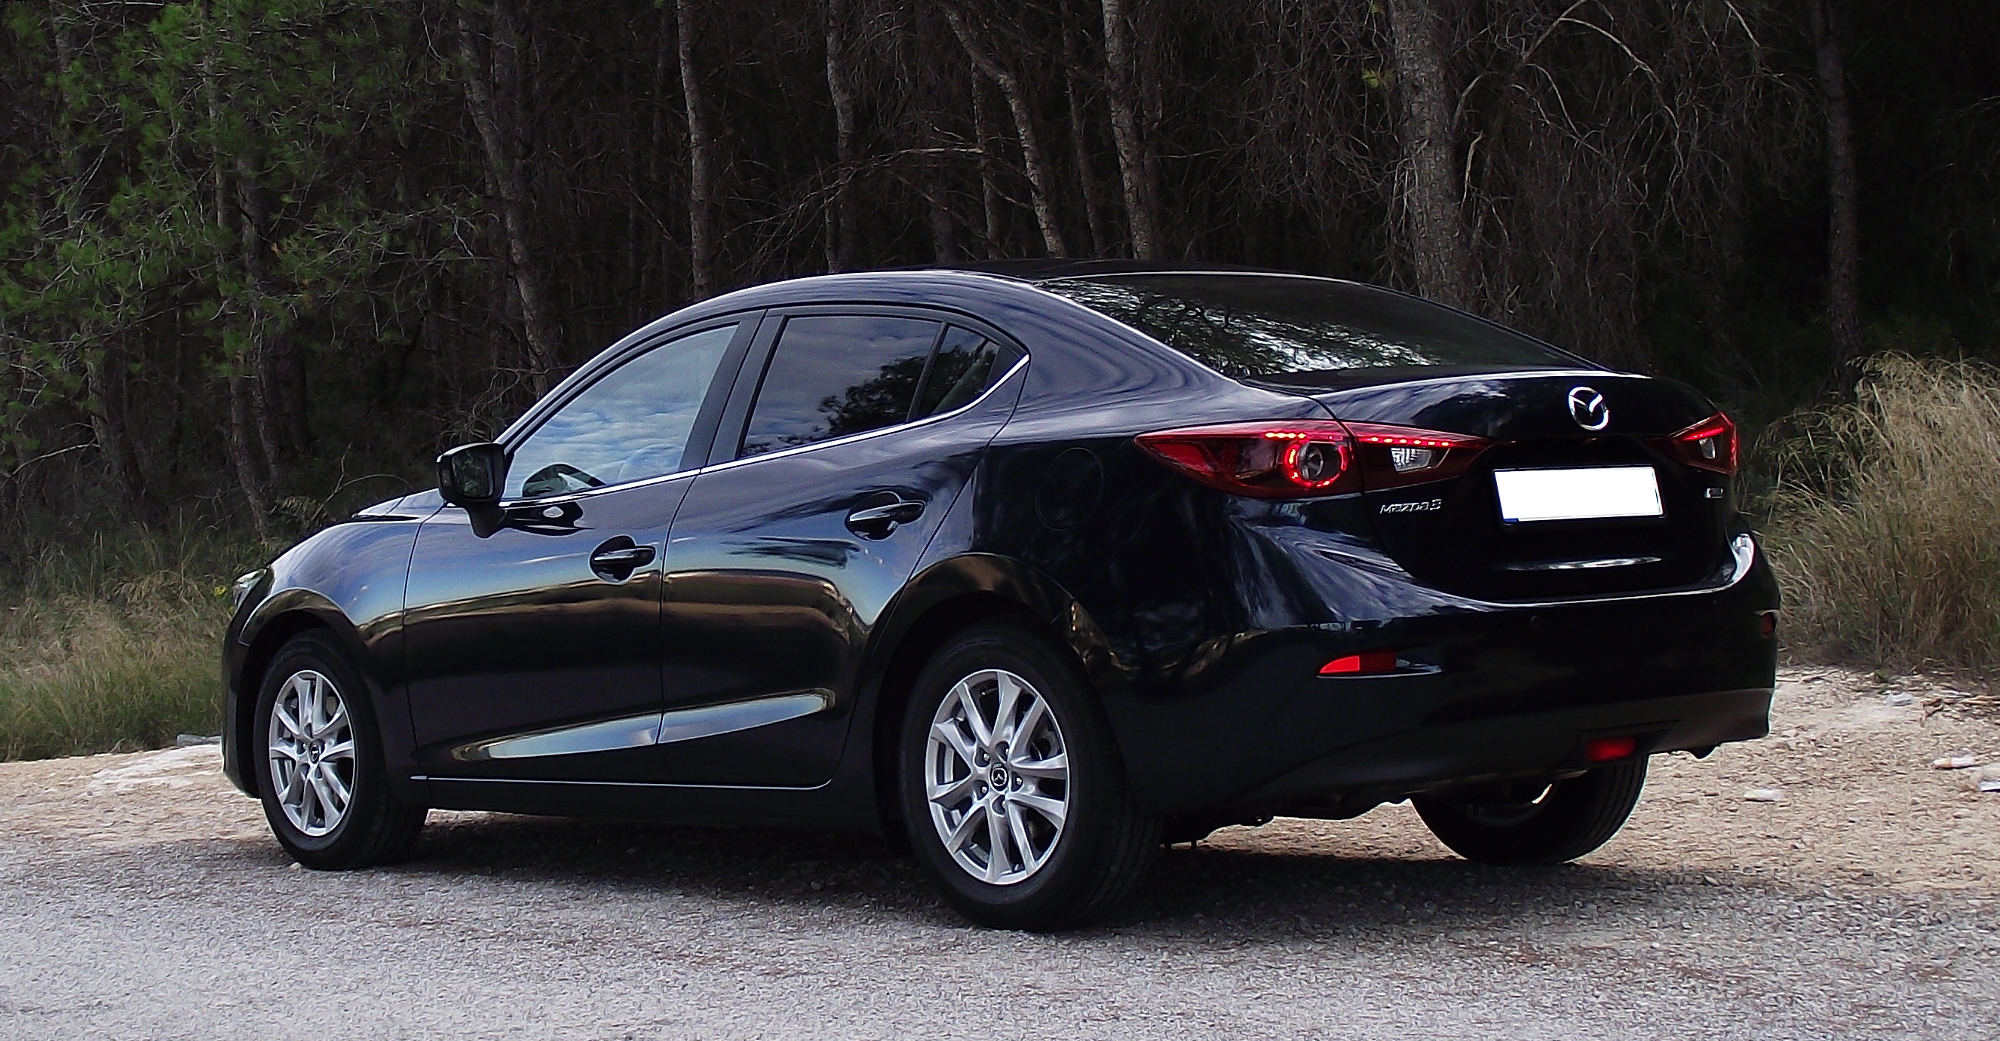 Black mazda. Мазда 3 черная. Mazda sedan 3 Black. Мазда 3 седан 2014. Мазда 3 седан 2016 черный.